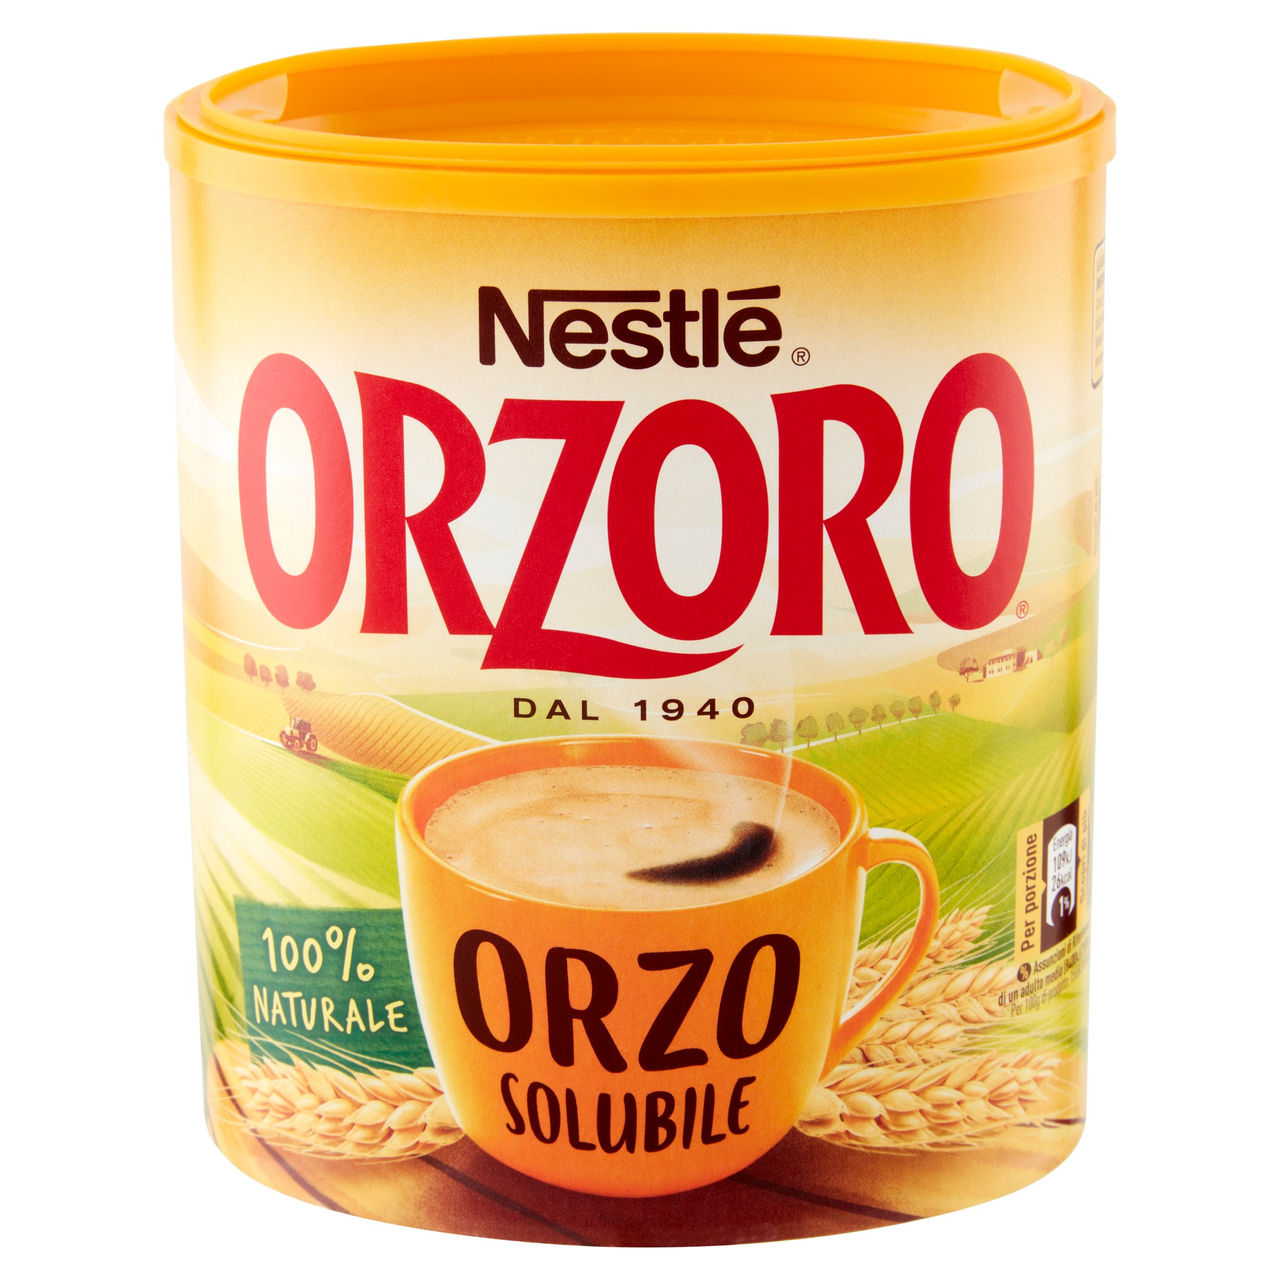 Nestlé Orzoro Orzo Solubile in vendita online